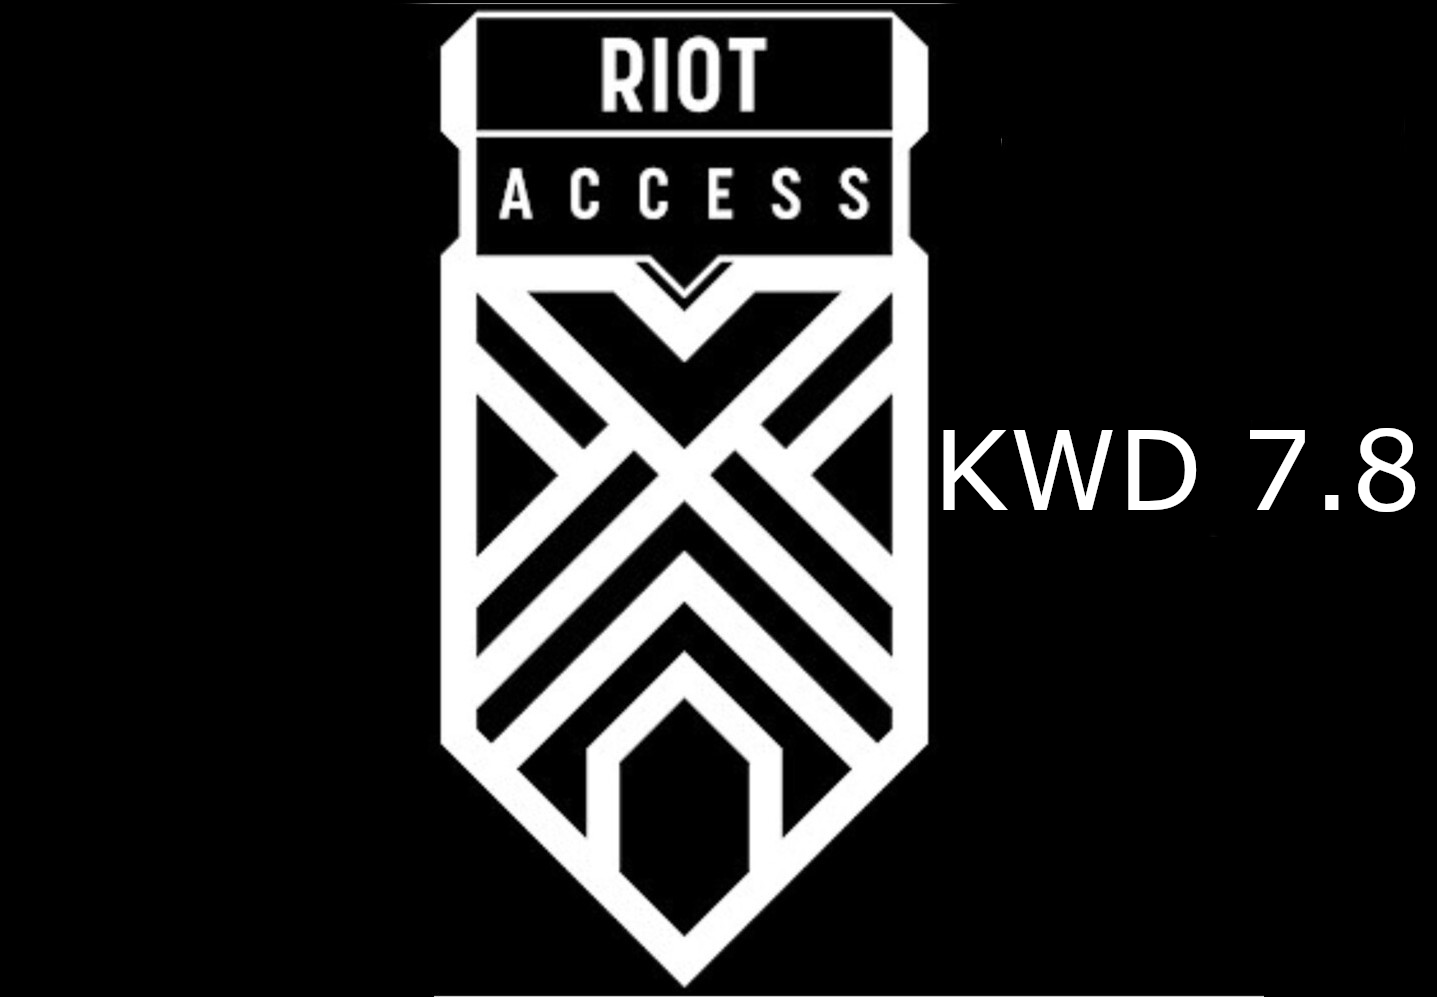 Riot Access 7.8 KWD Code KW